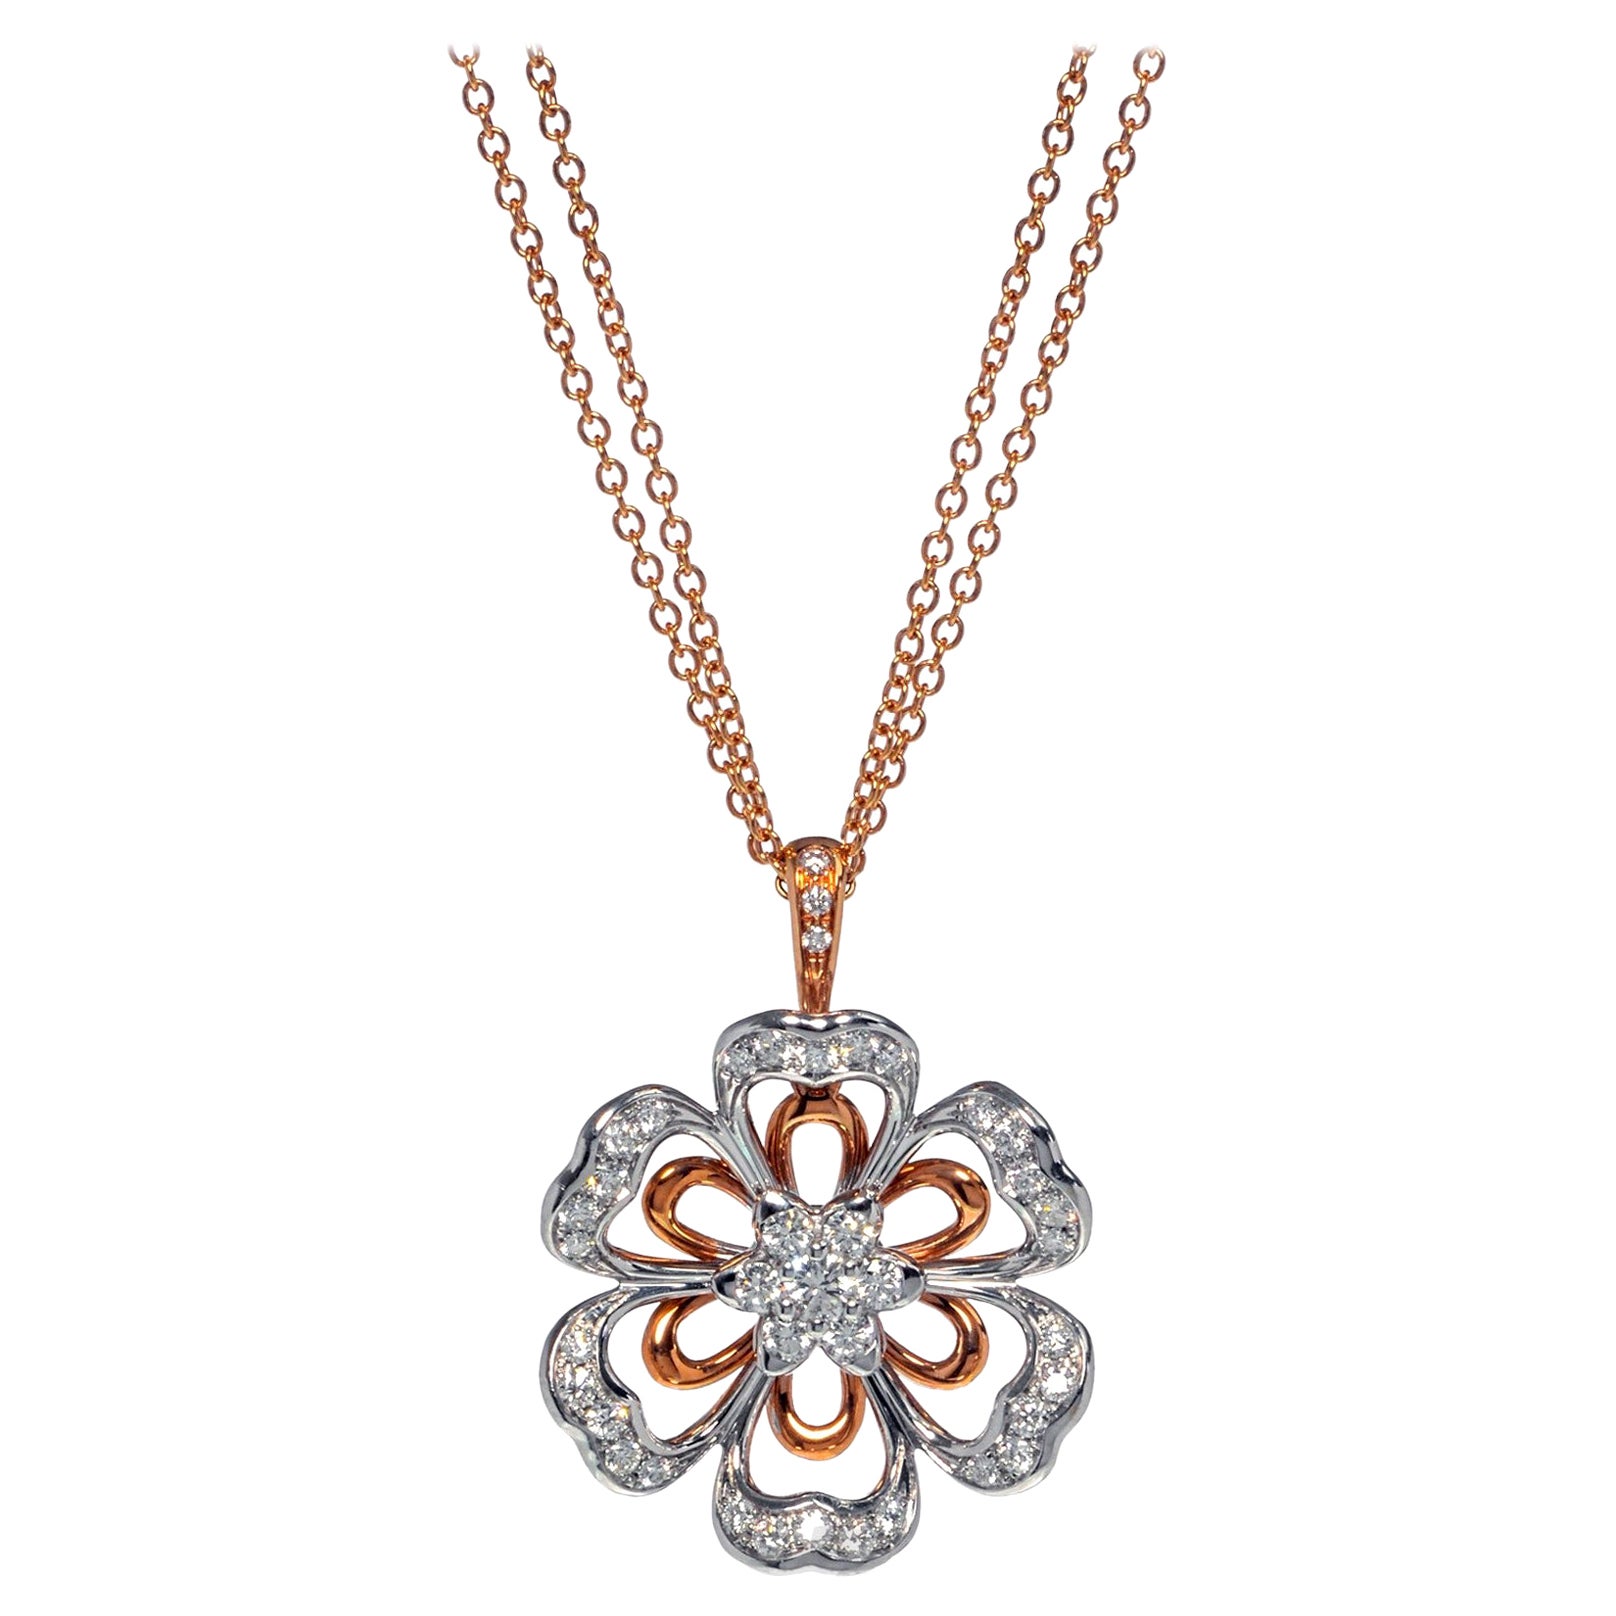 Luca Carati Diamond Flower Pendant Necklace 18K Rose & White Gold 1.11Cttw